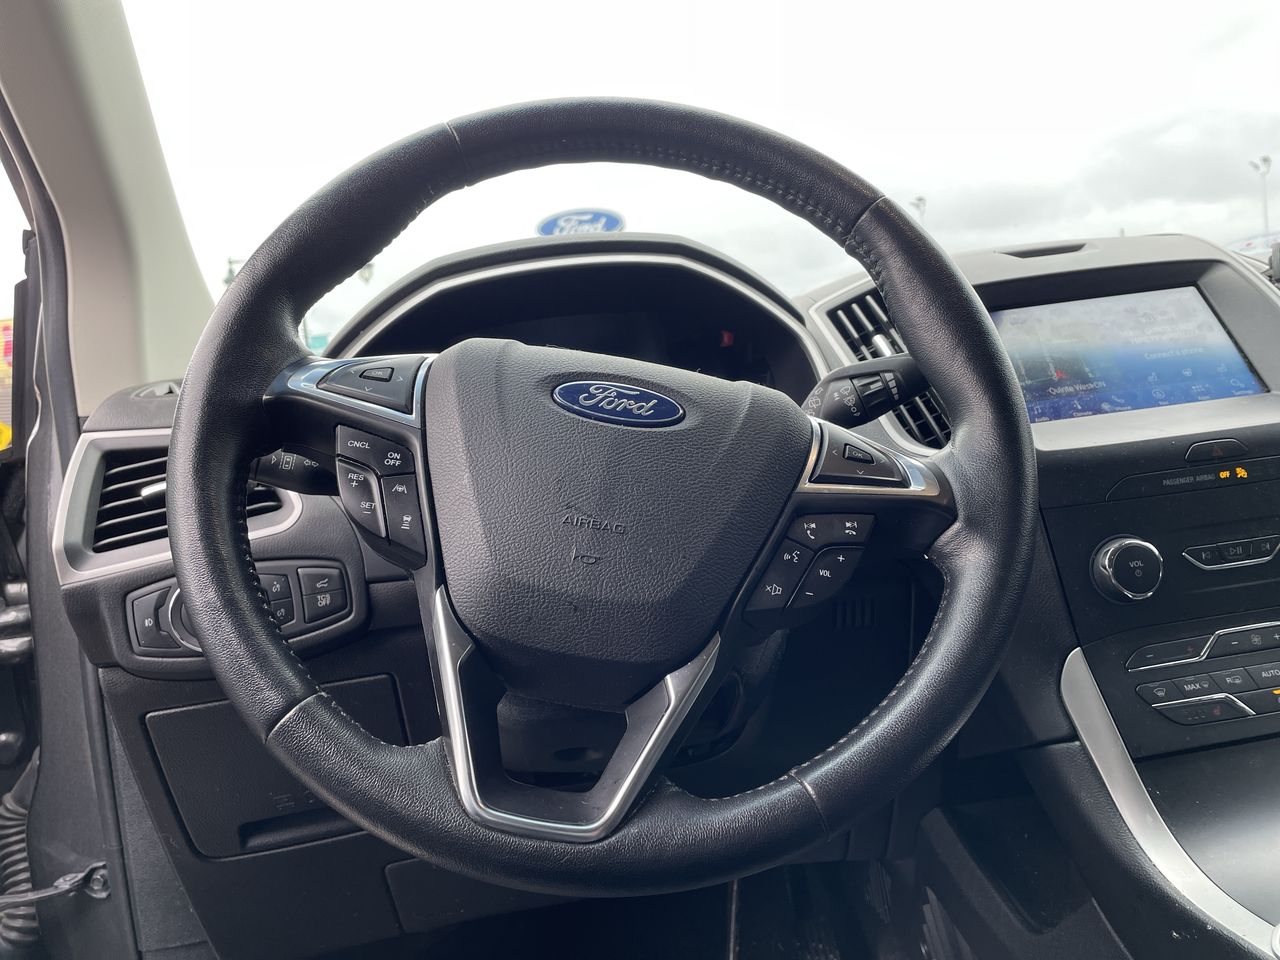 2019 Ford Edge - 21596B Full Image 13